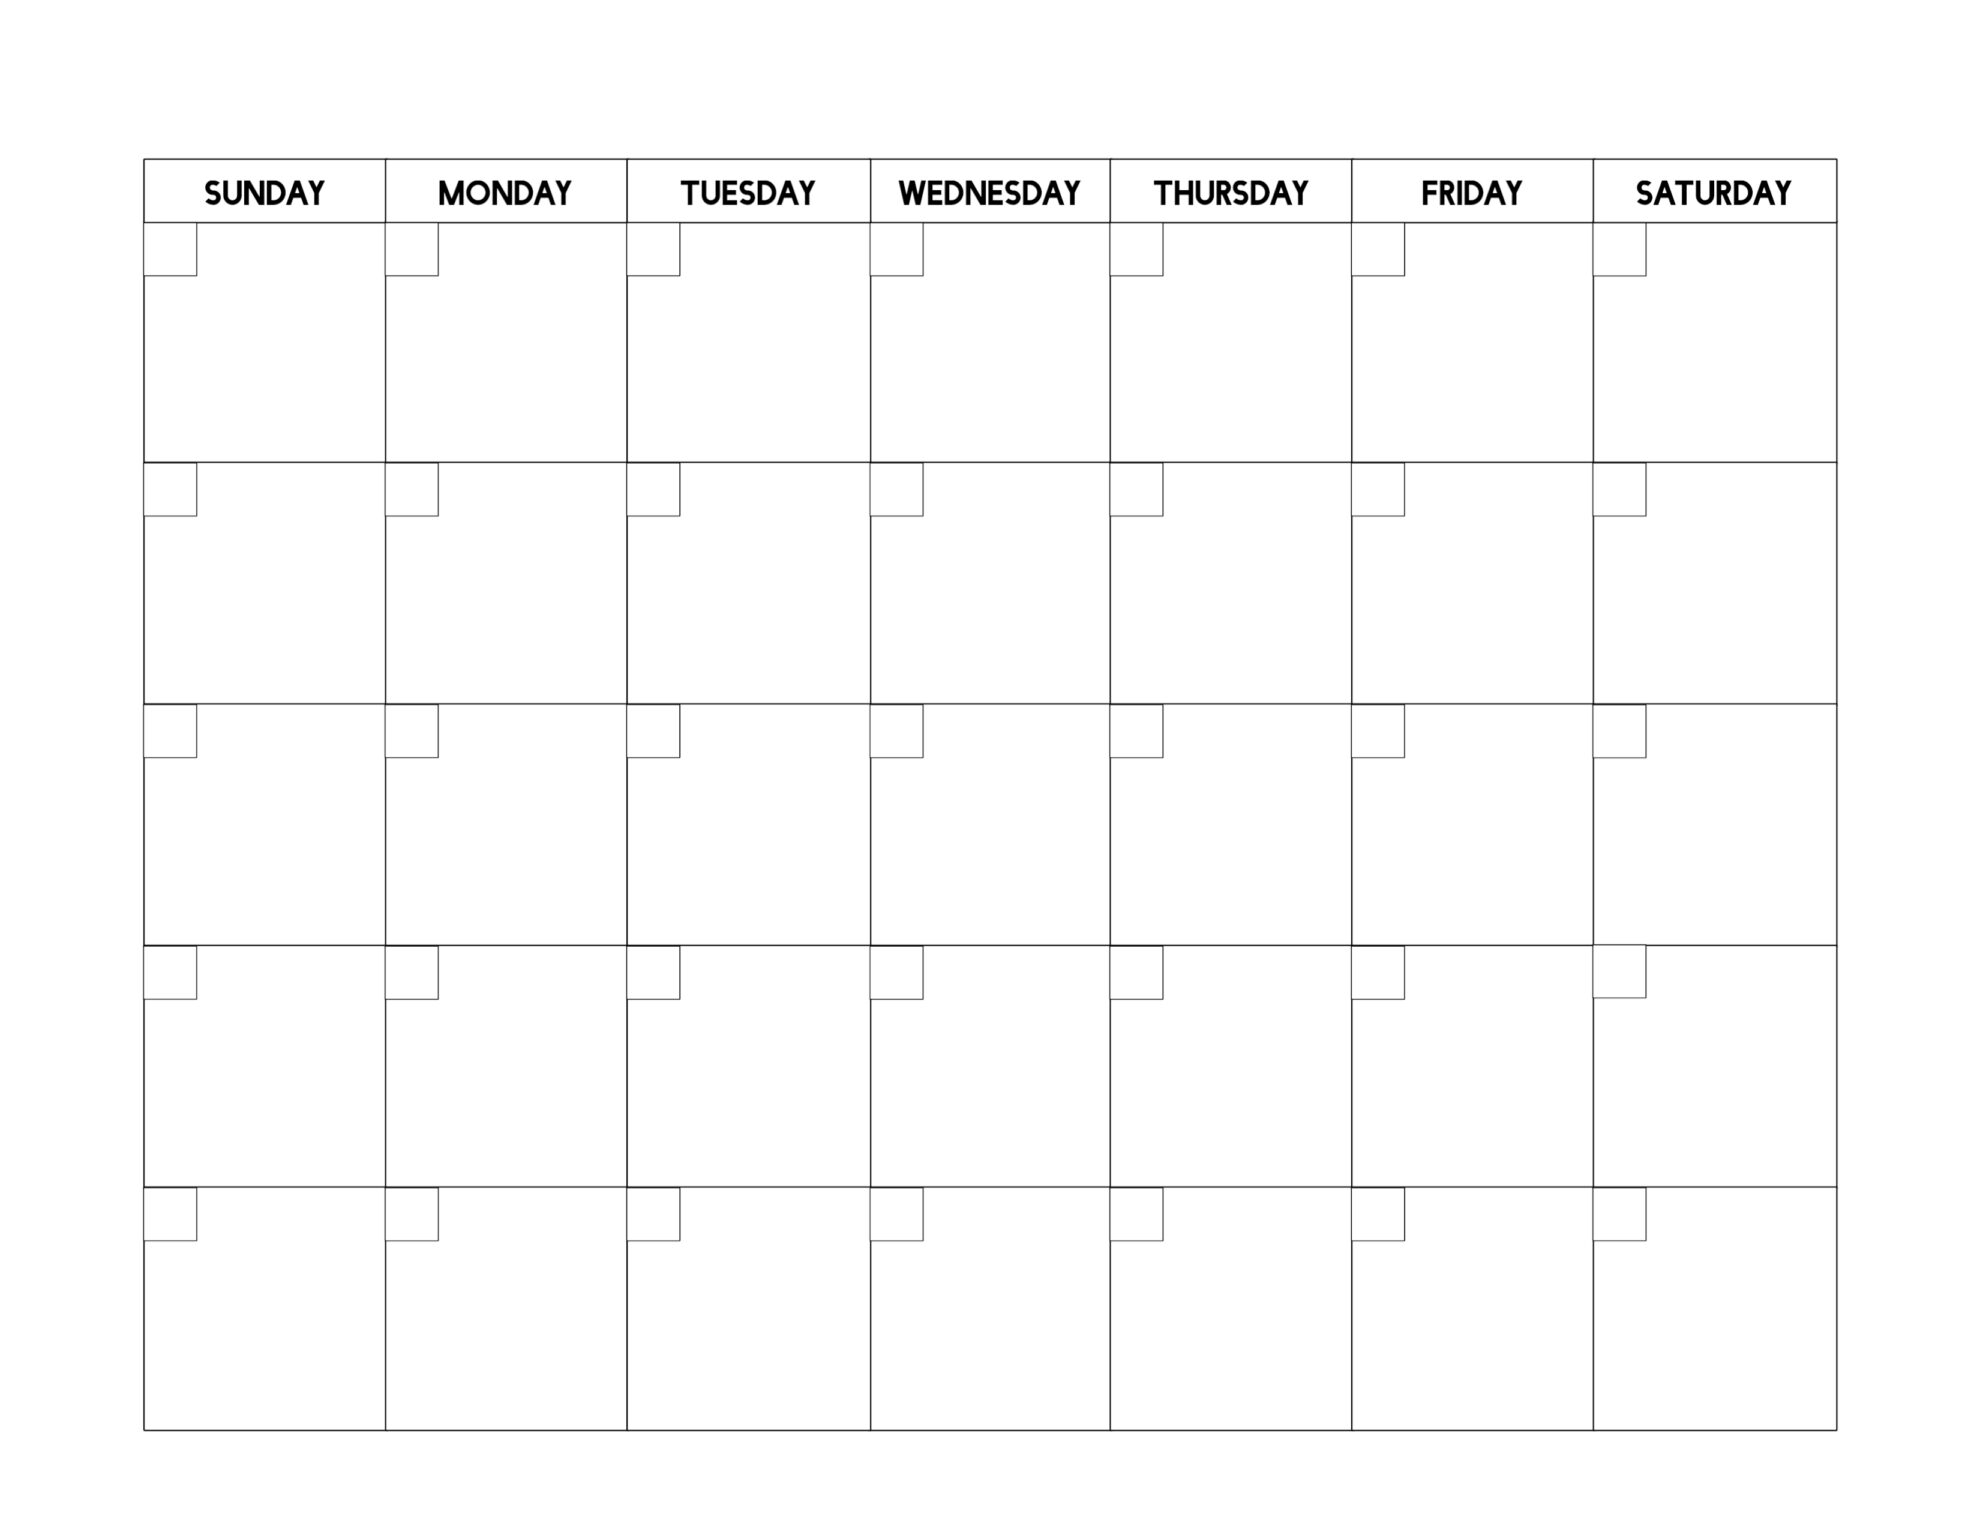 free-printable-blank-calendar-template-paper-trail-design